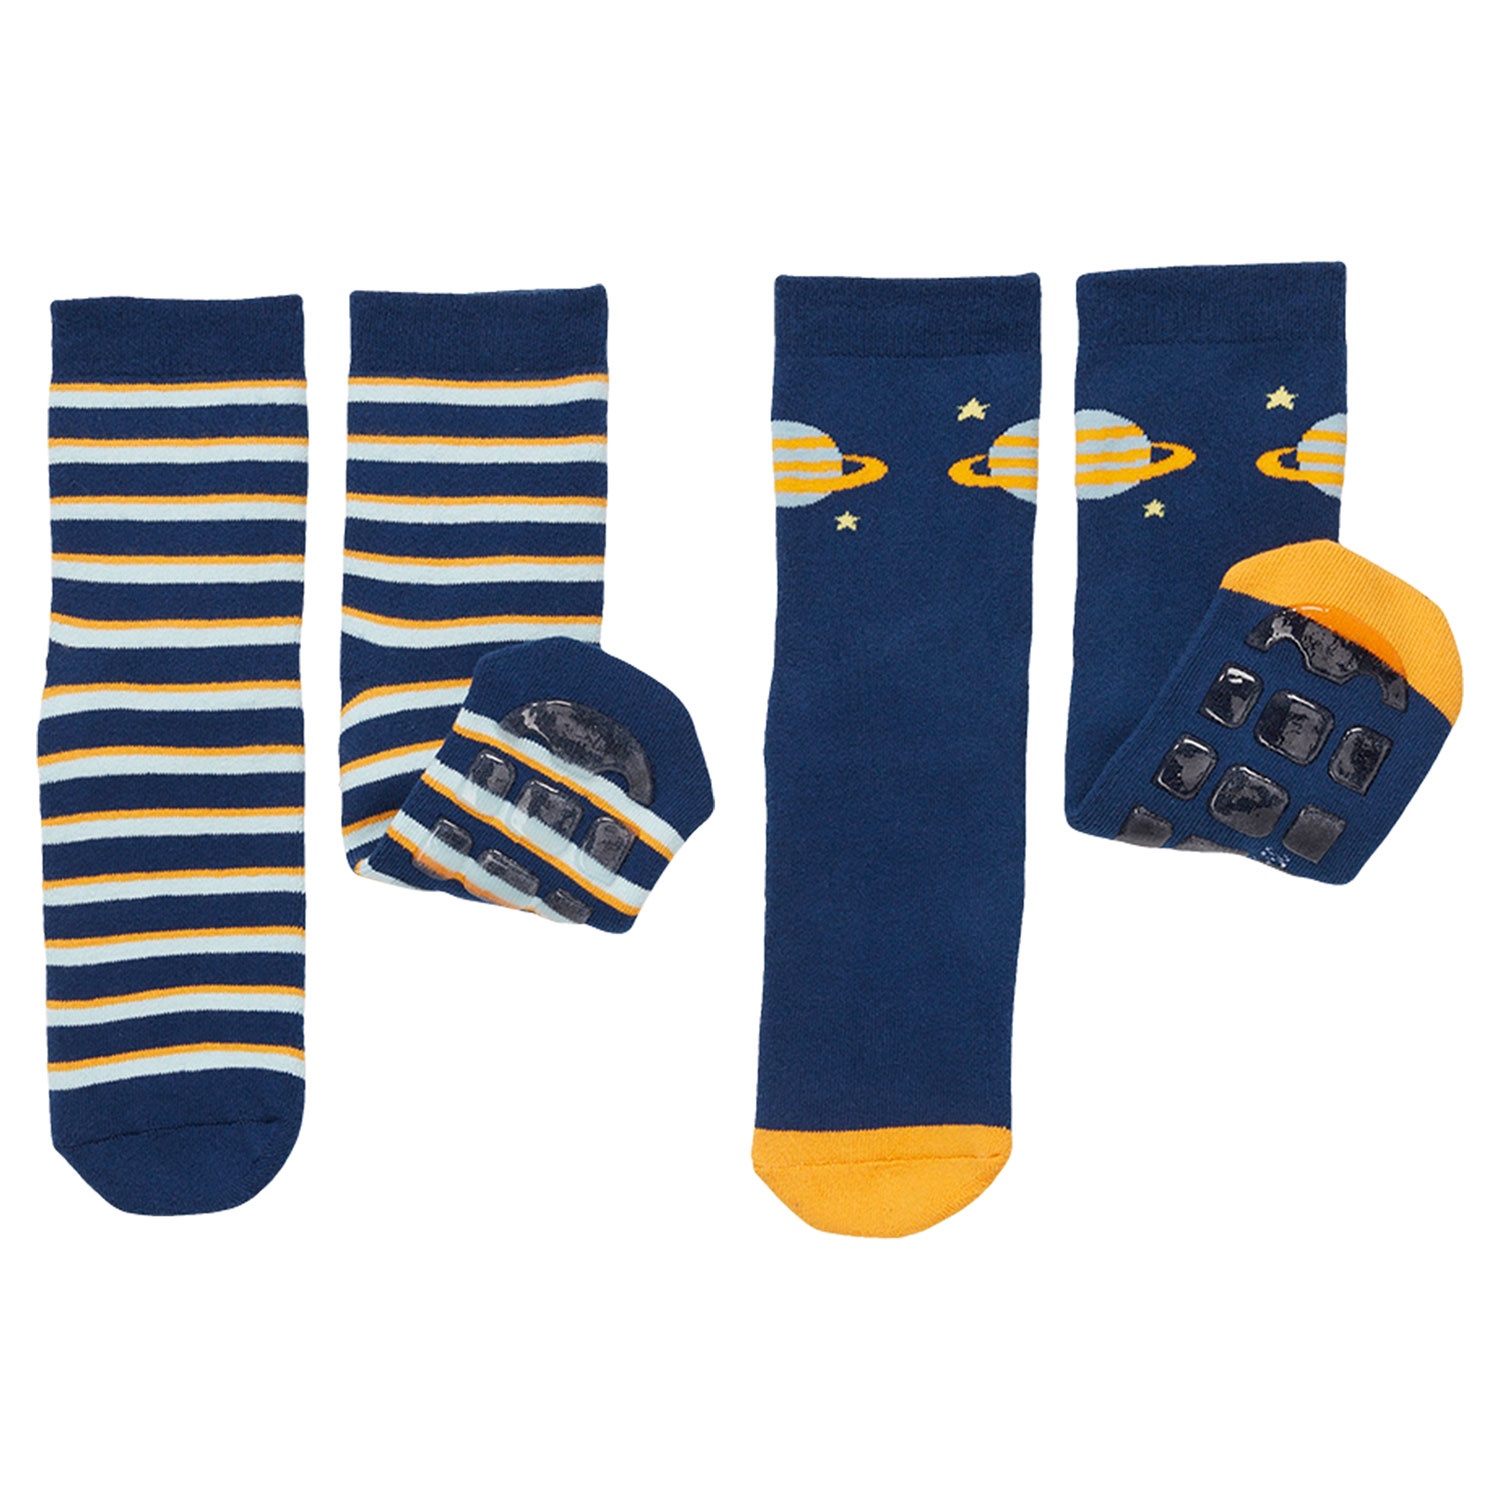 ALIVE® Kinder Antirutsch-Socken, 2 Paar